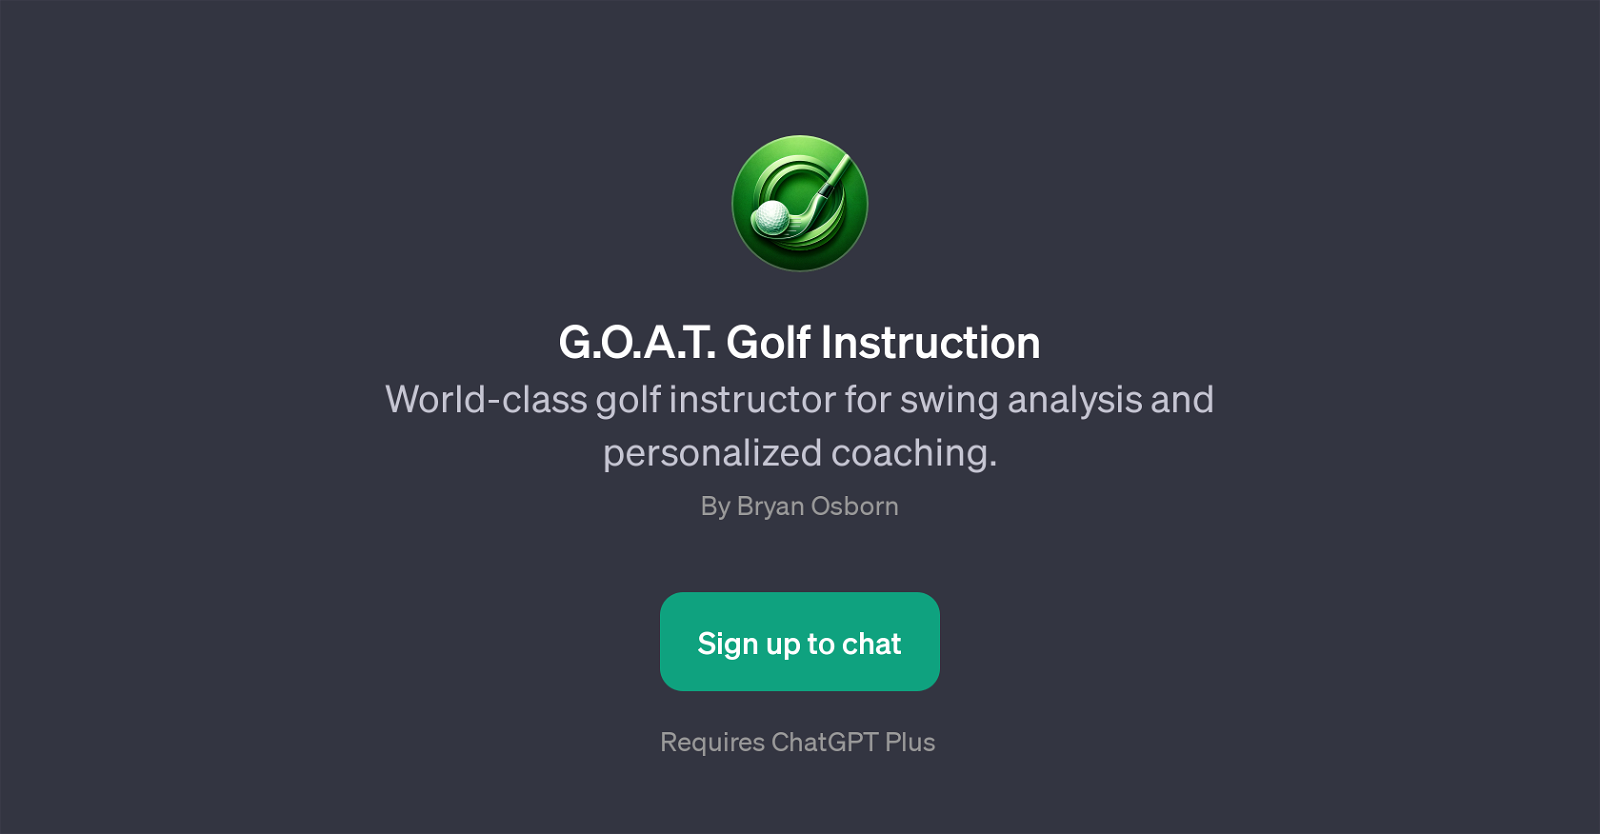 G.O.A.T. Golf Instruction website